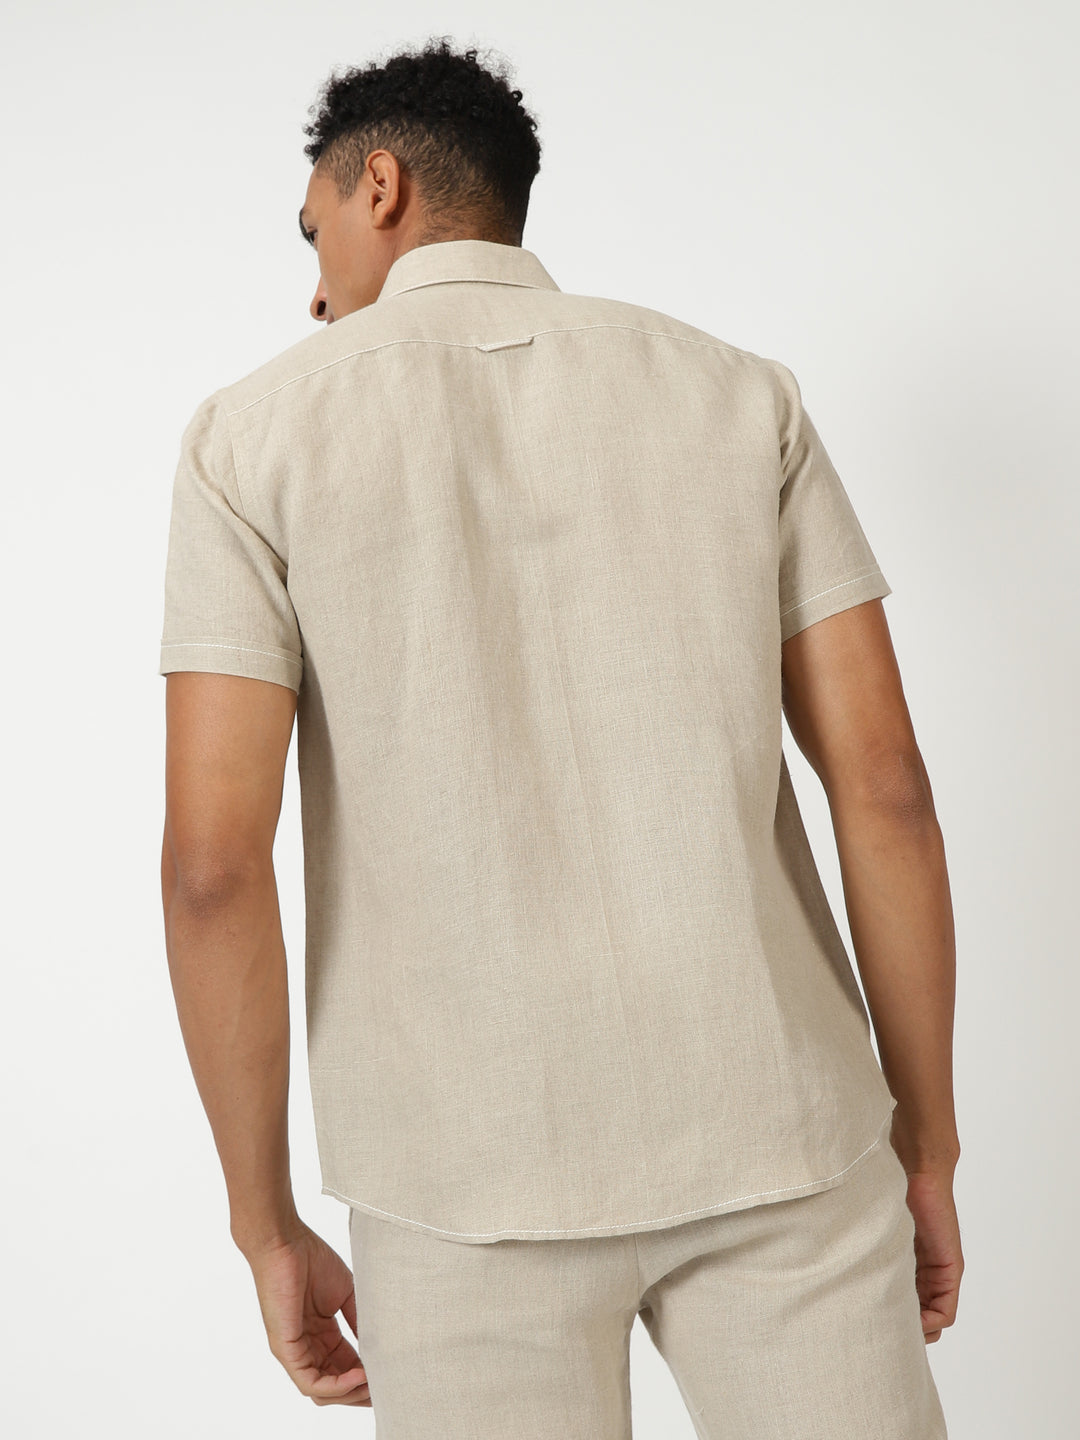 Peter - Pure Linen Stitch Detailed Half Sleeve Shirt - Dark Ecru